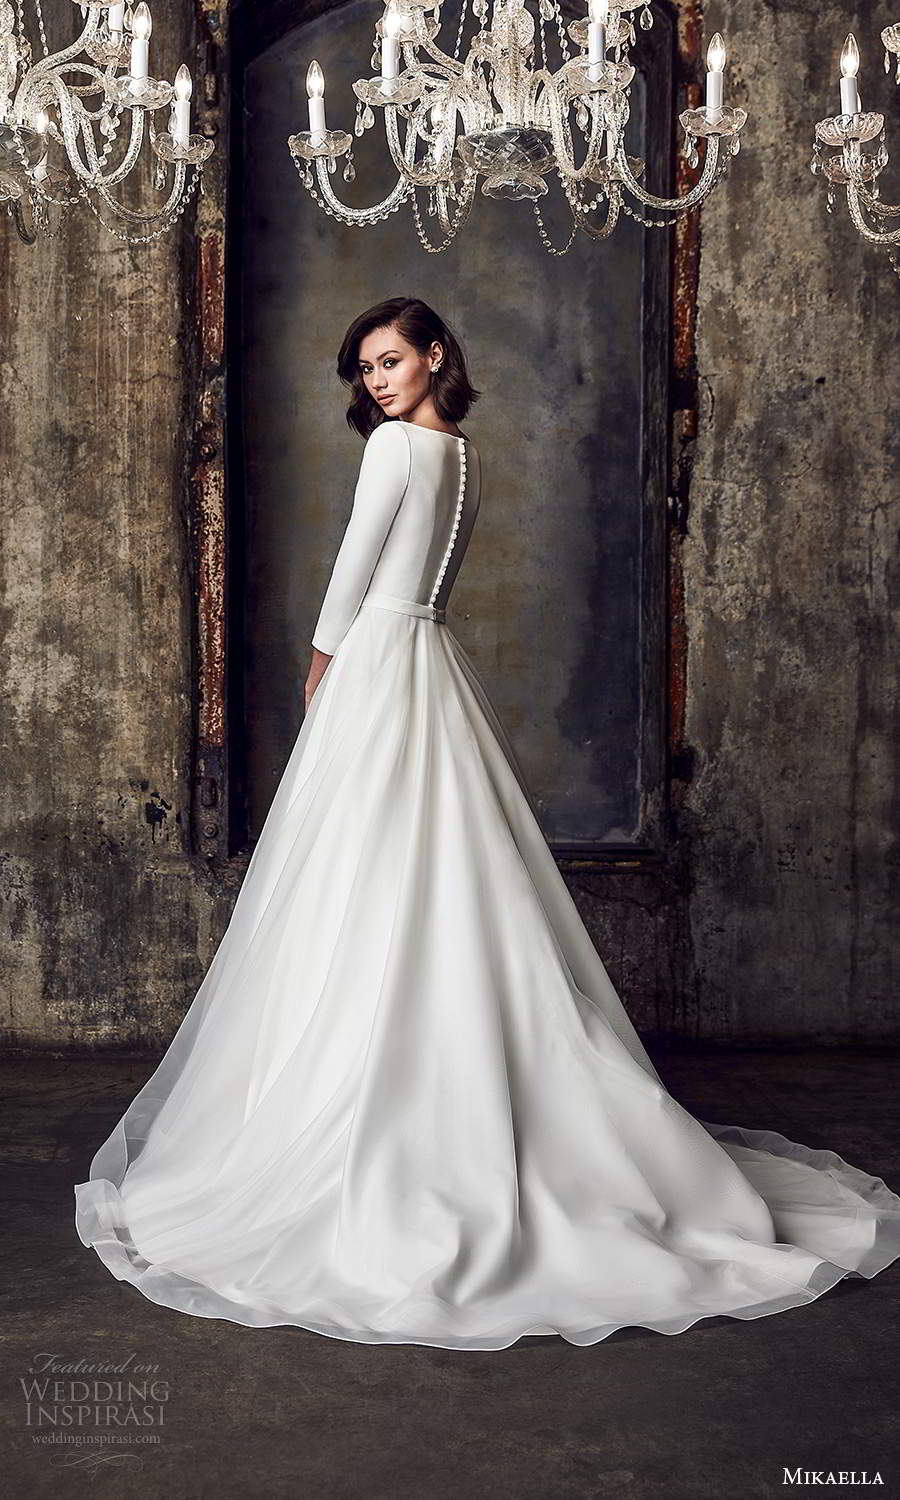 mikaella fall 2020 bridal 3 quarter sleeves bateau neckline clean minimalist a line ball gown wedding dress chapel train (2) bv